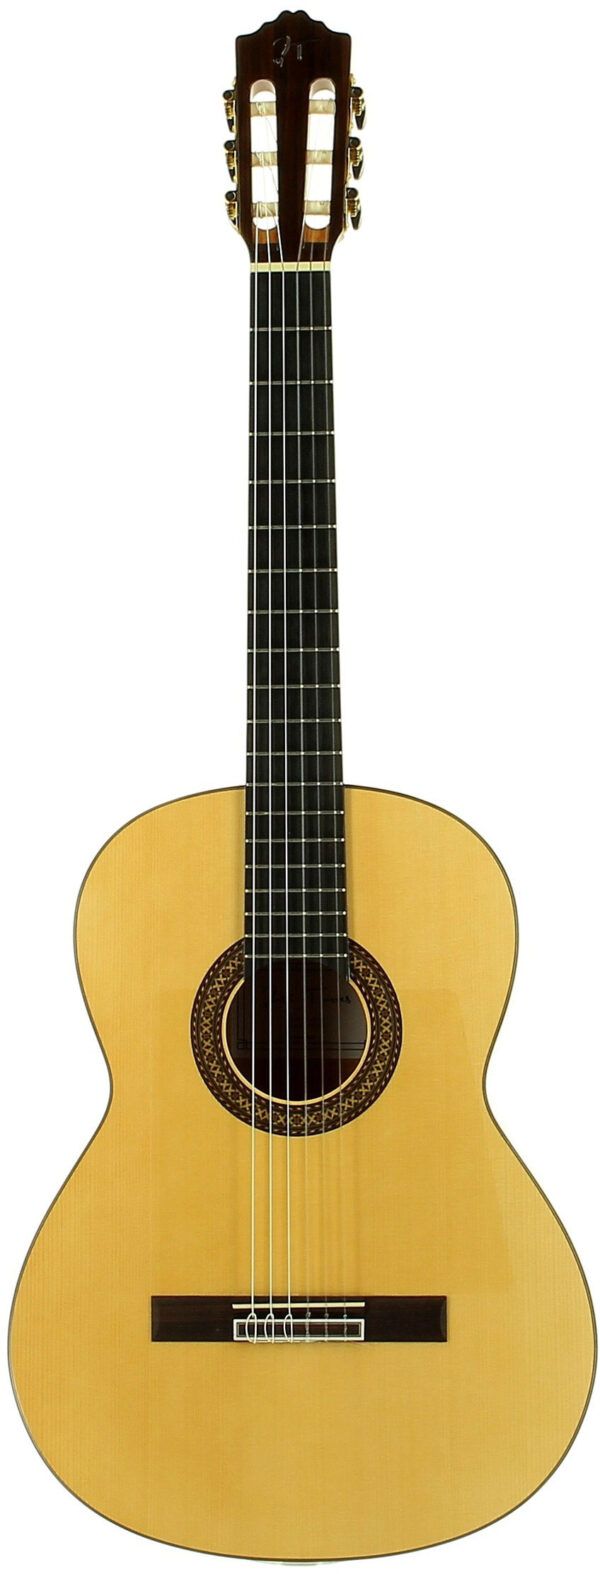 GUITARRA FLAMENCA Guitarra flamenca fabricada en España.    Tapa maciza de abeto.Aros y fondo de sicomoro.Mástil de cedro.Diapasón de ébano. Puente de palosanto. Clavijero dorado.Acabado brillante.